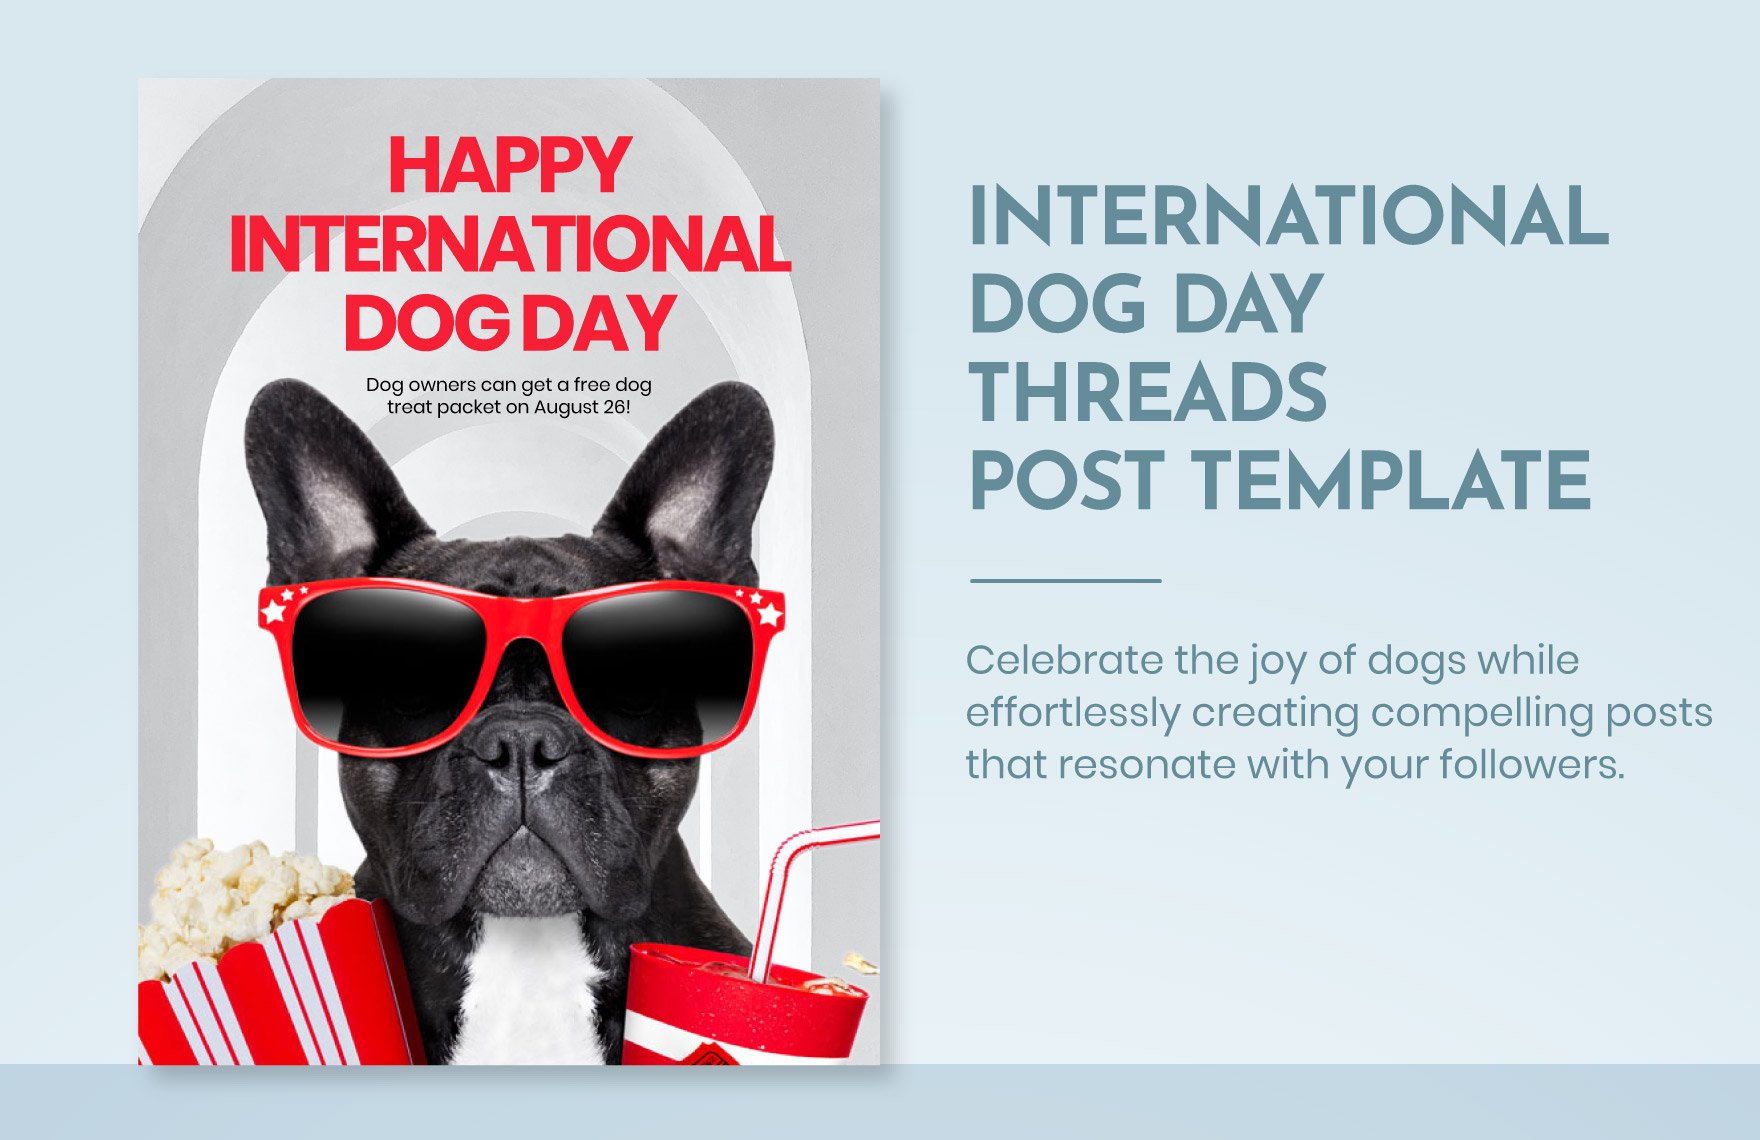 International Dog Day  Threads Post Template